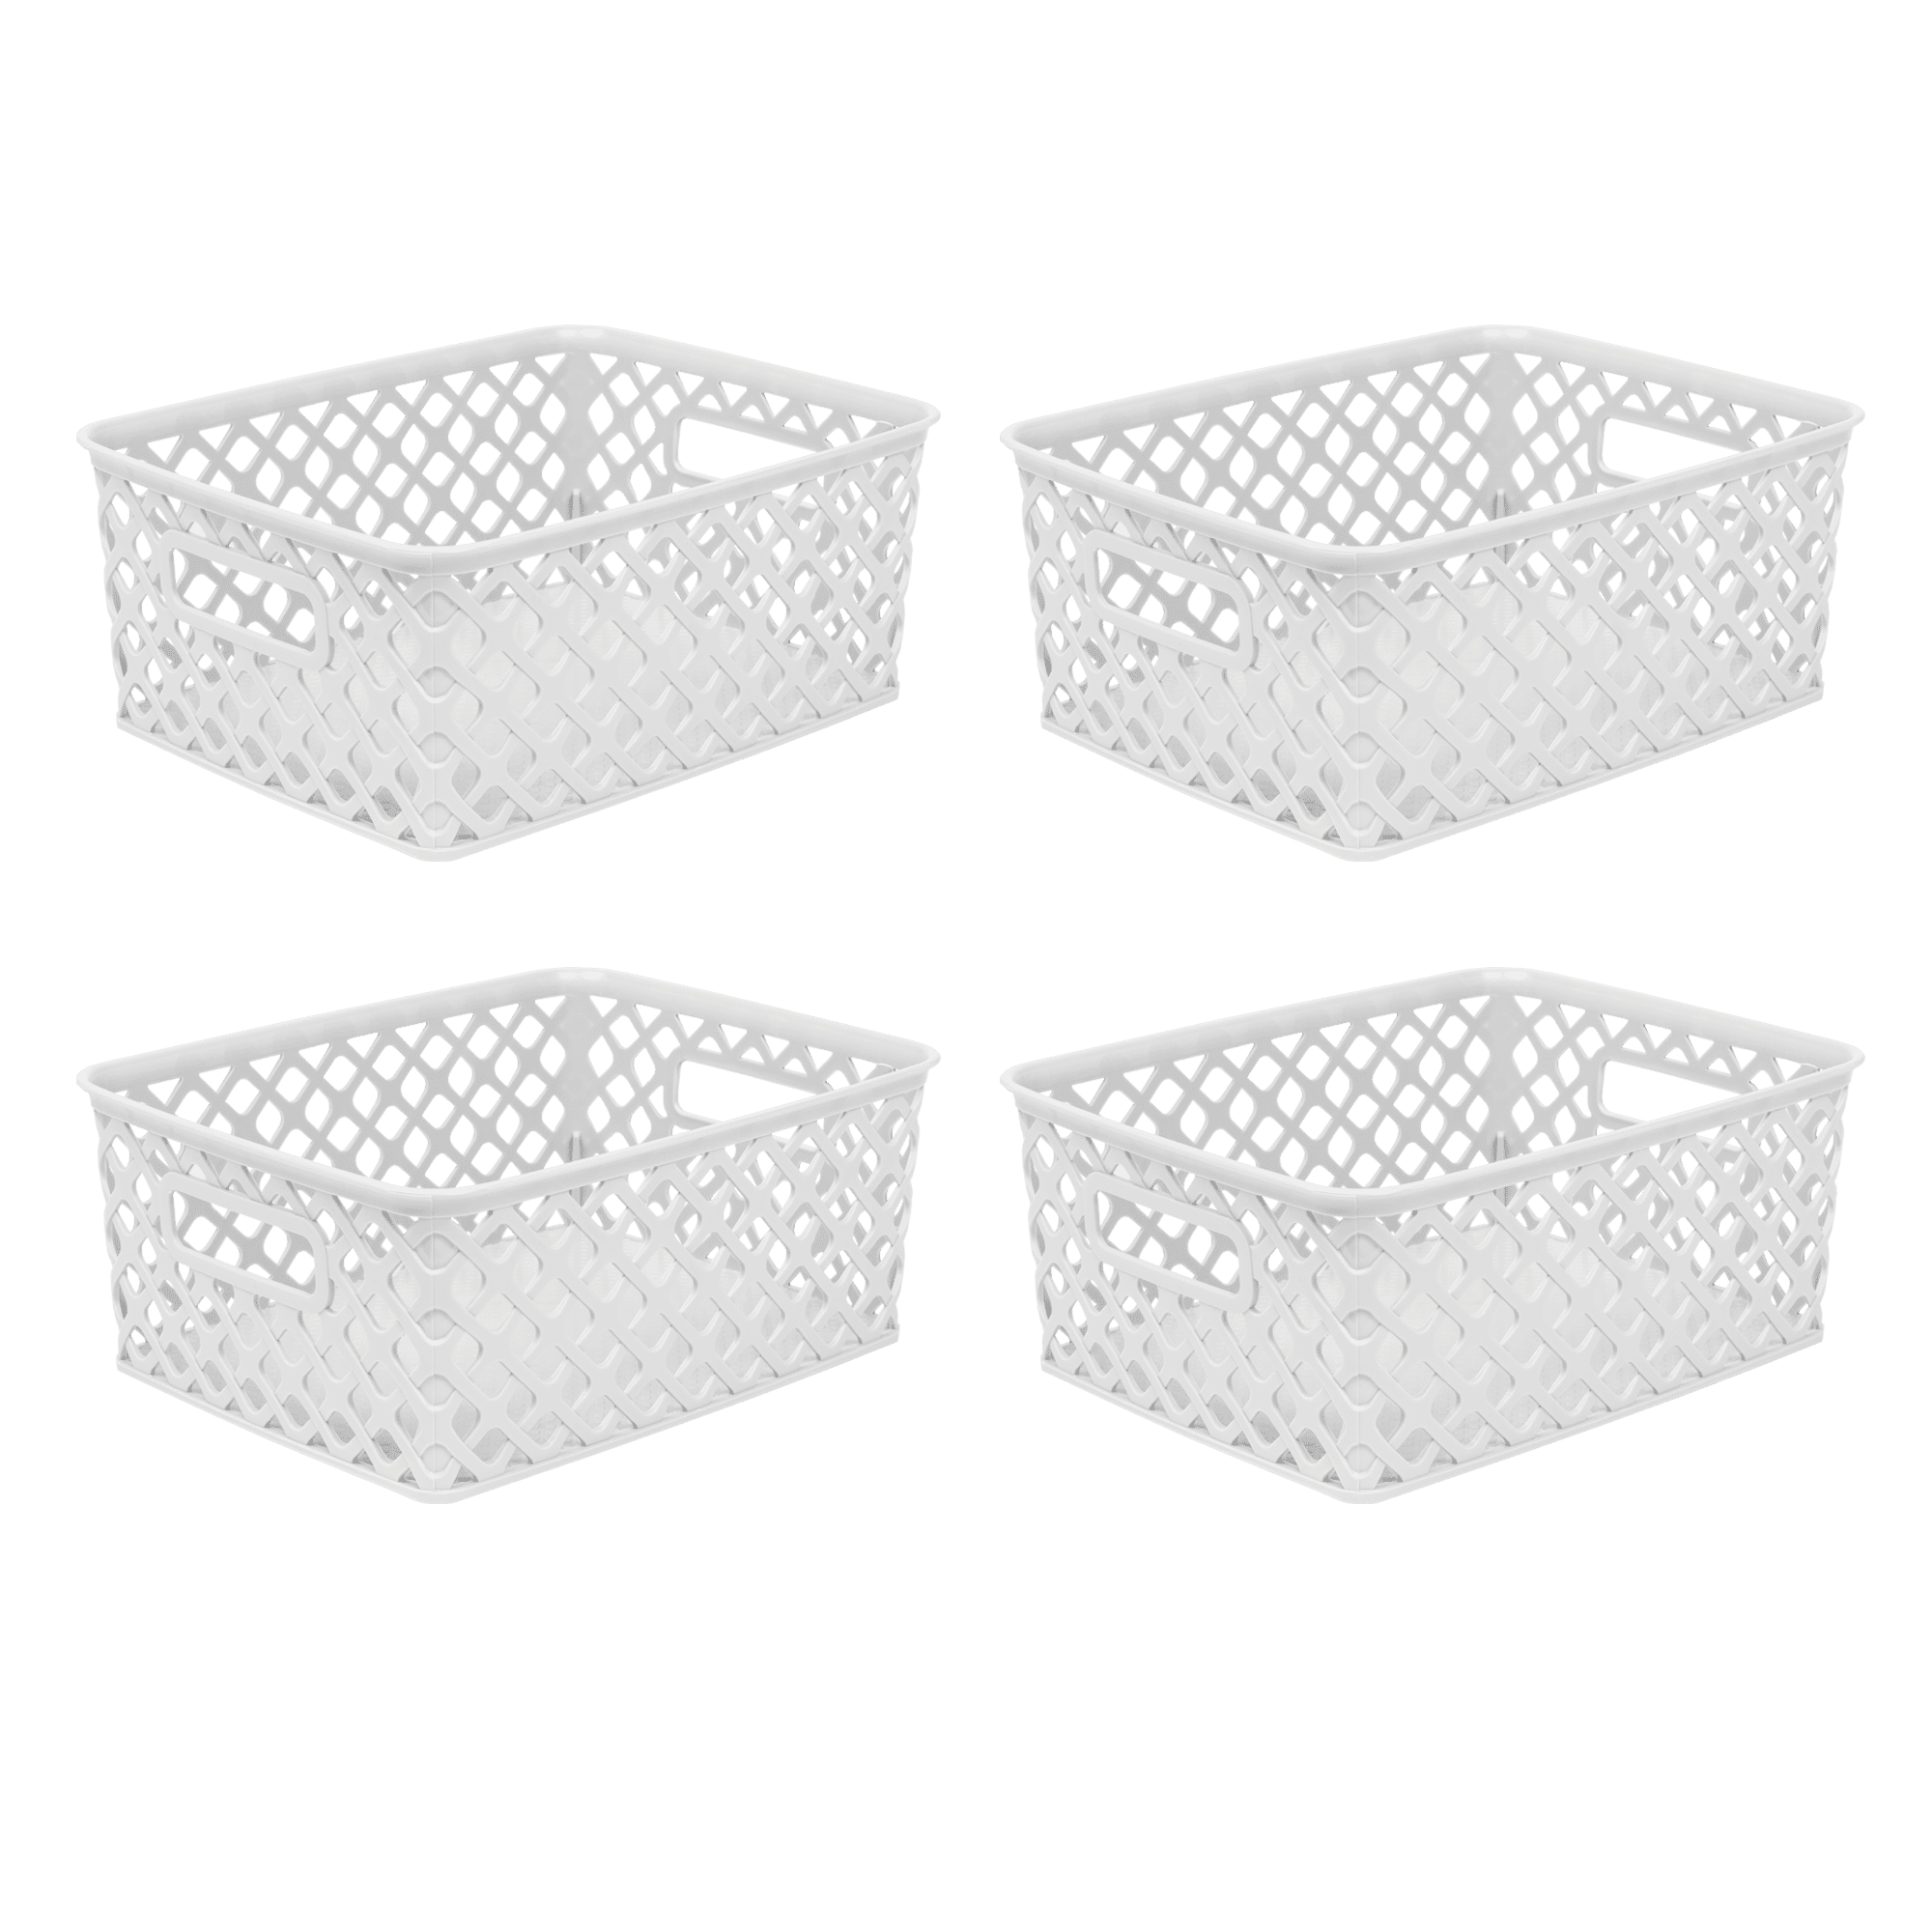 Mainstays Medium White Decorative Storage Basket 